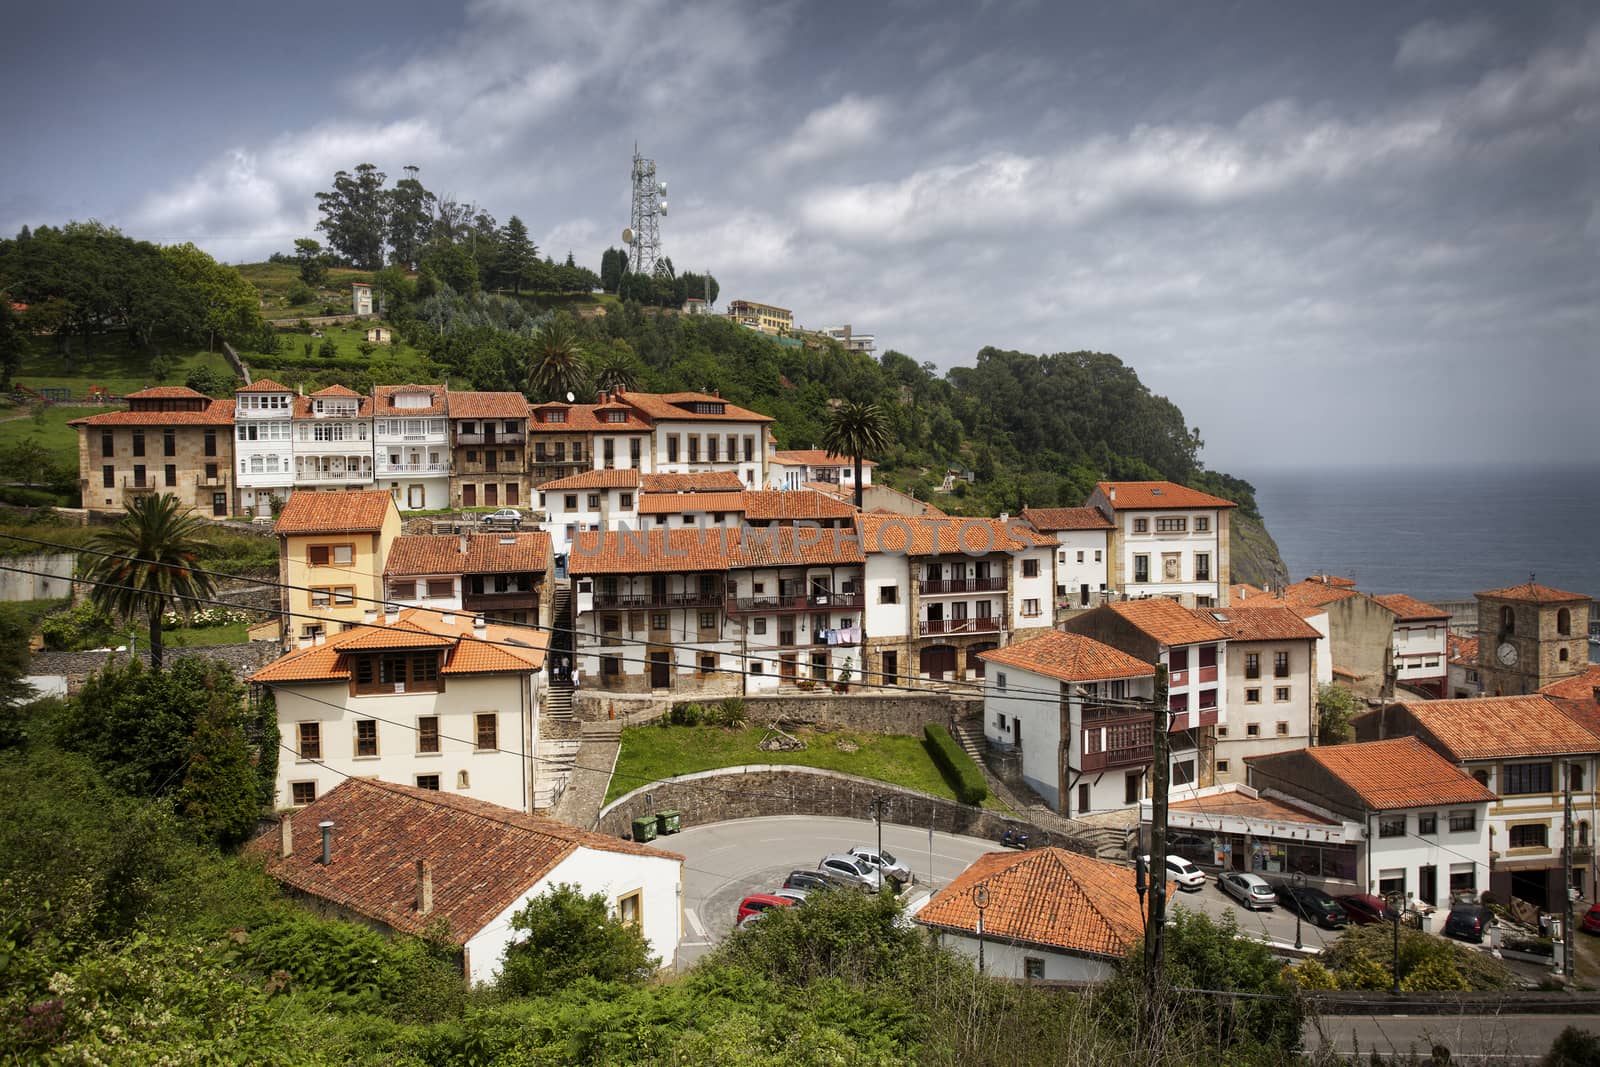 Small fishing village on the Spanish coast, Asturias, Spain.